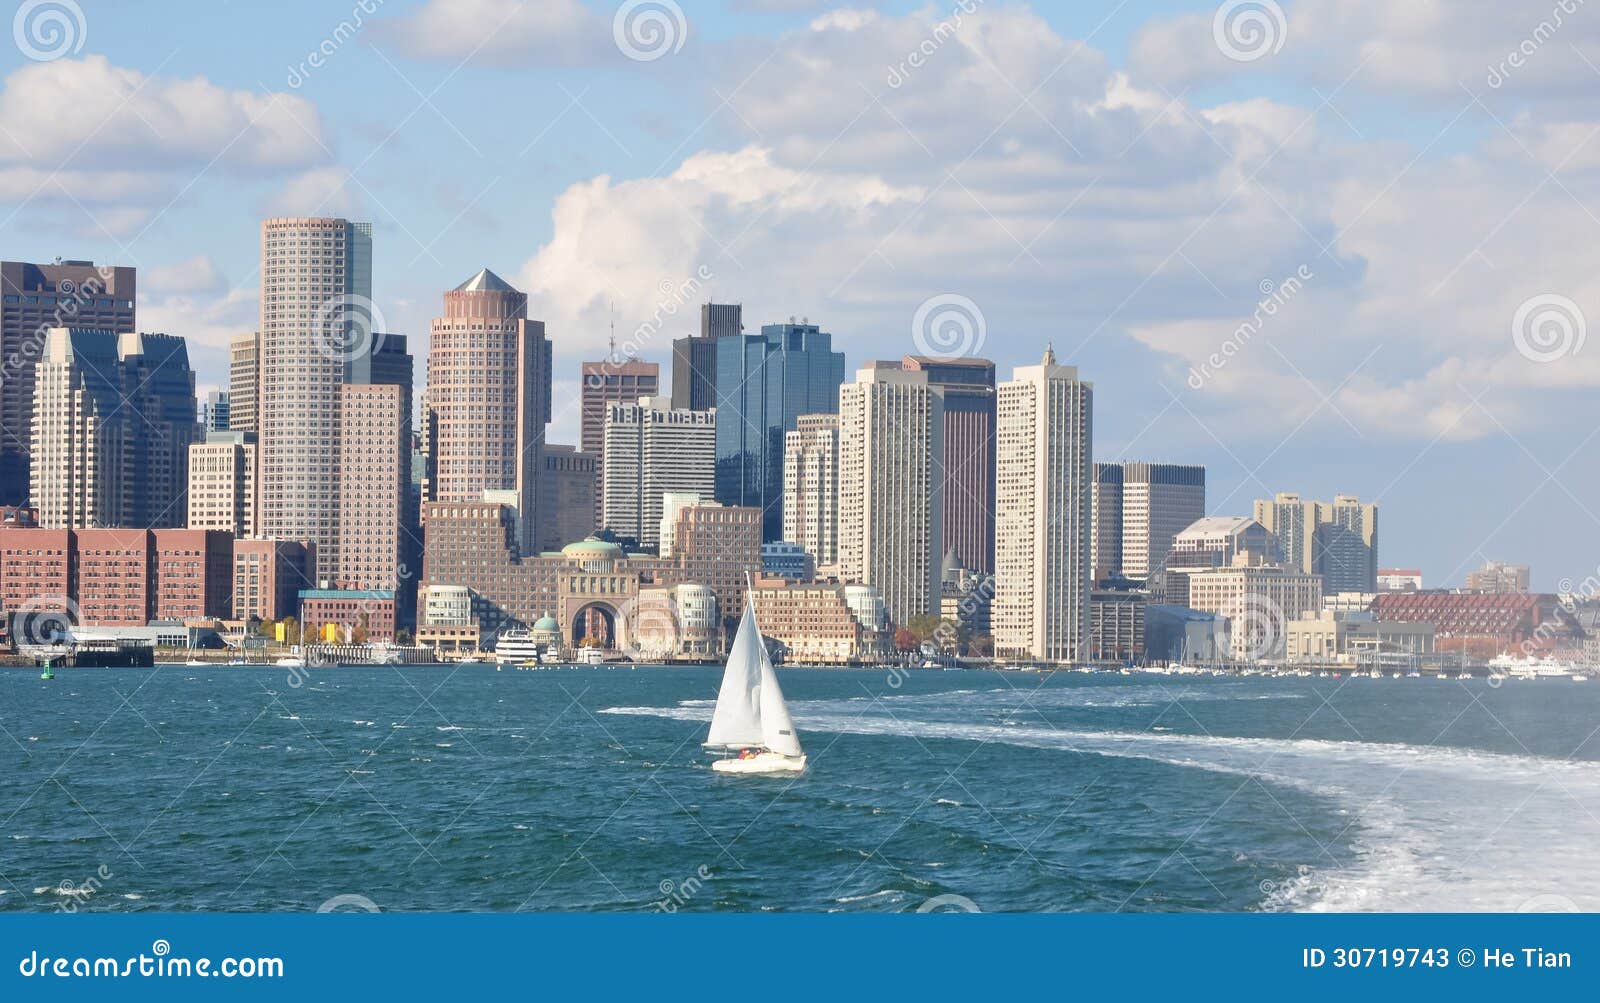 boston skyline seen from boston harbor